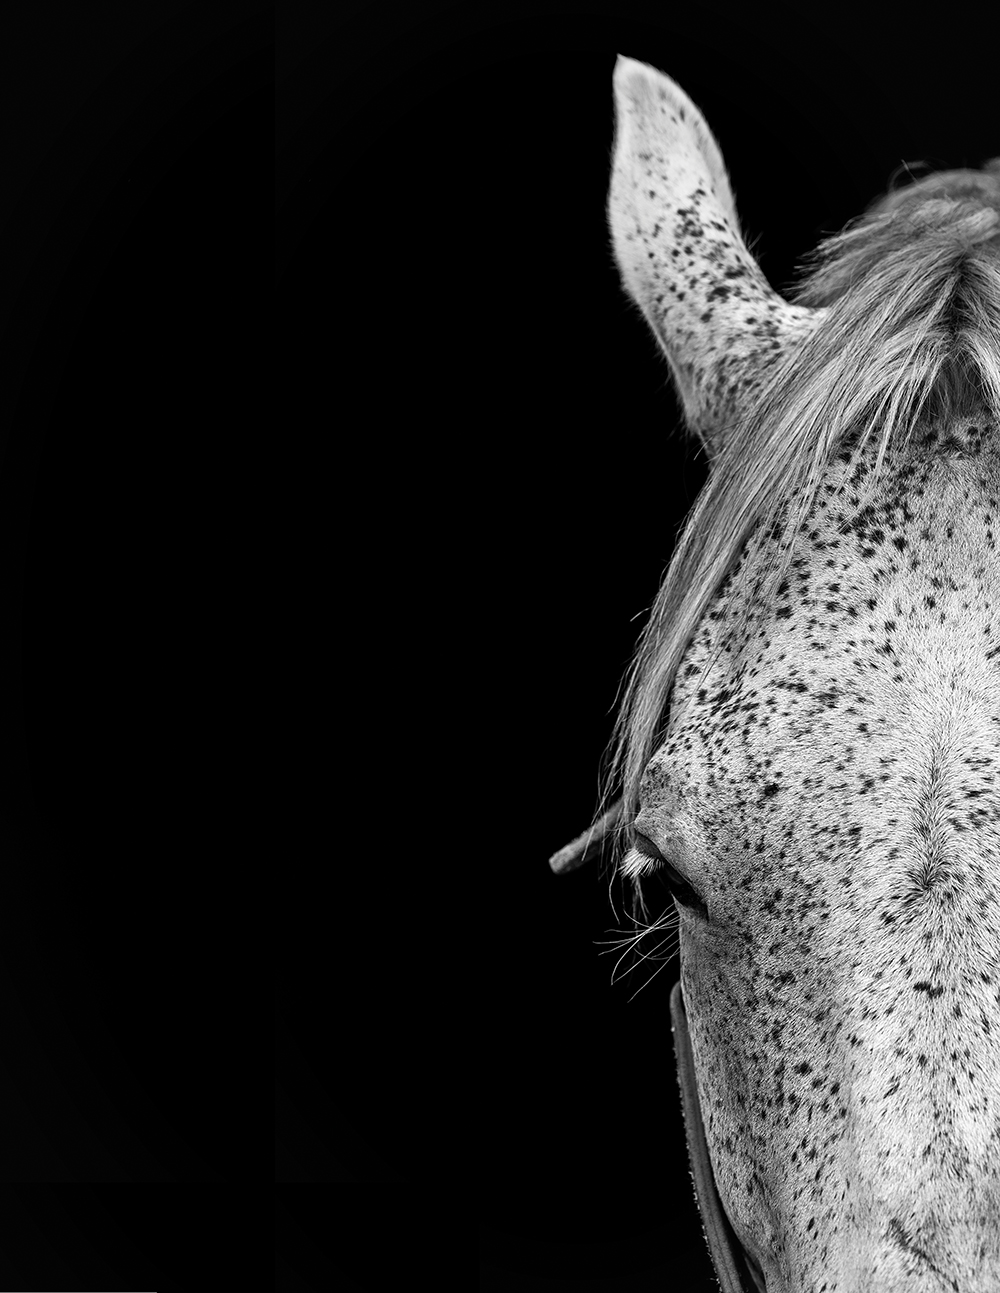 Doug Burlock takes equestrian photography to the next level